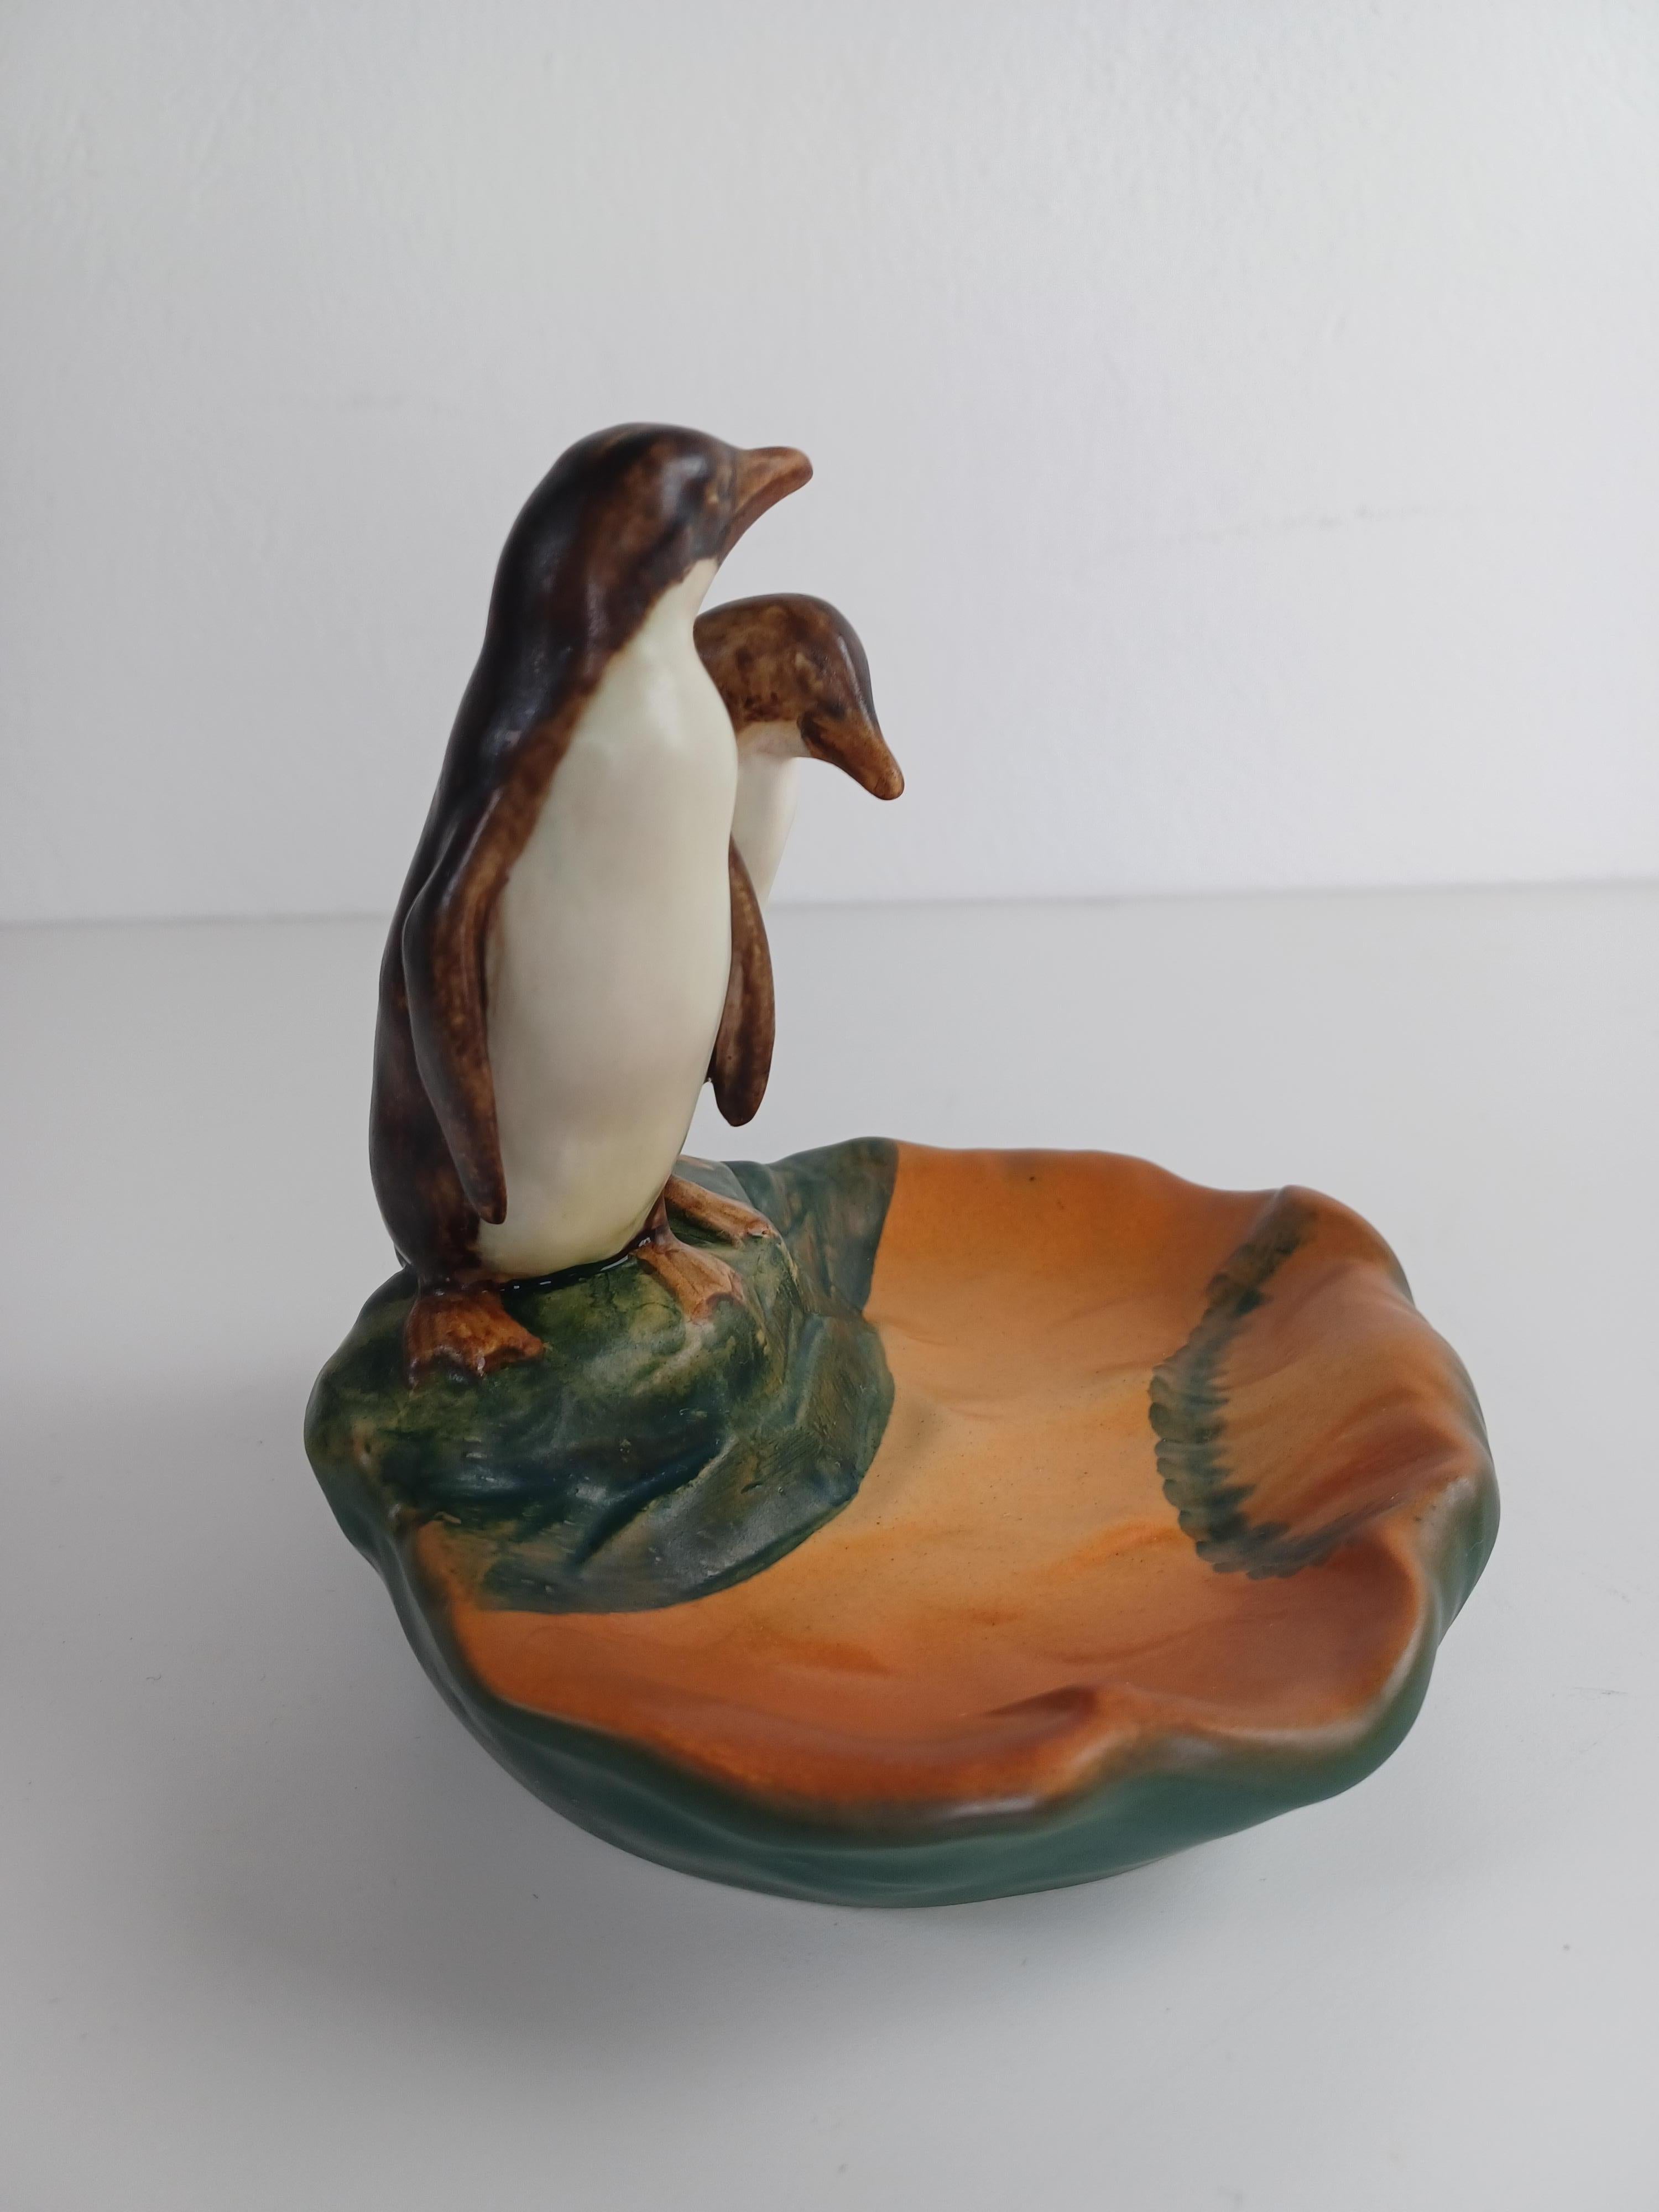 1920's Danish Hand-Crafted Art Nouveau Penguin Ash Tray / Bowl by P. Ipsens Enke For Sale 1